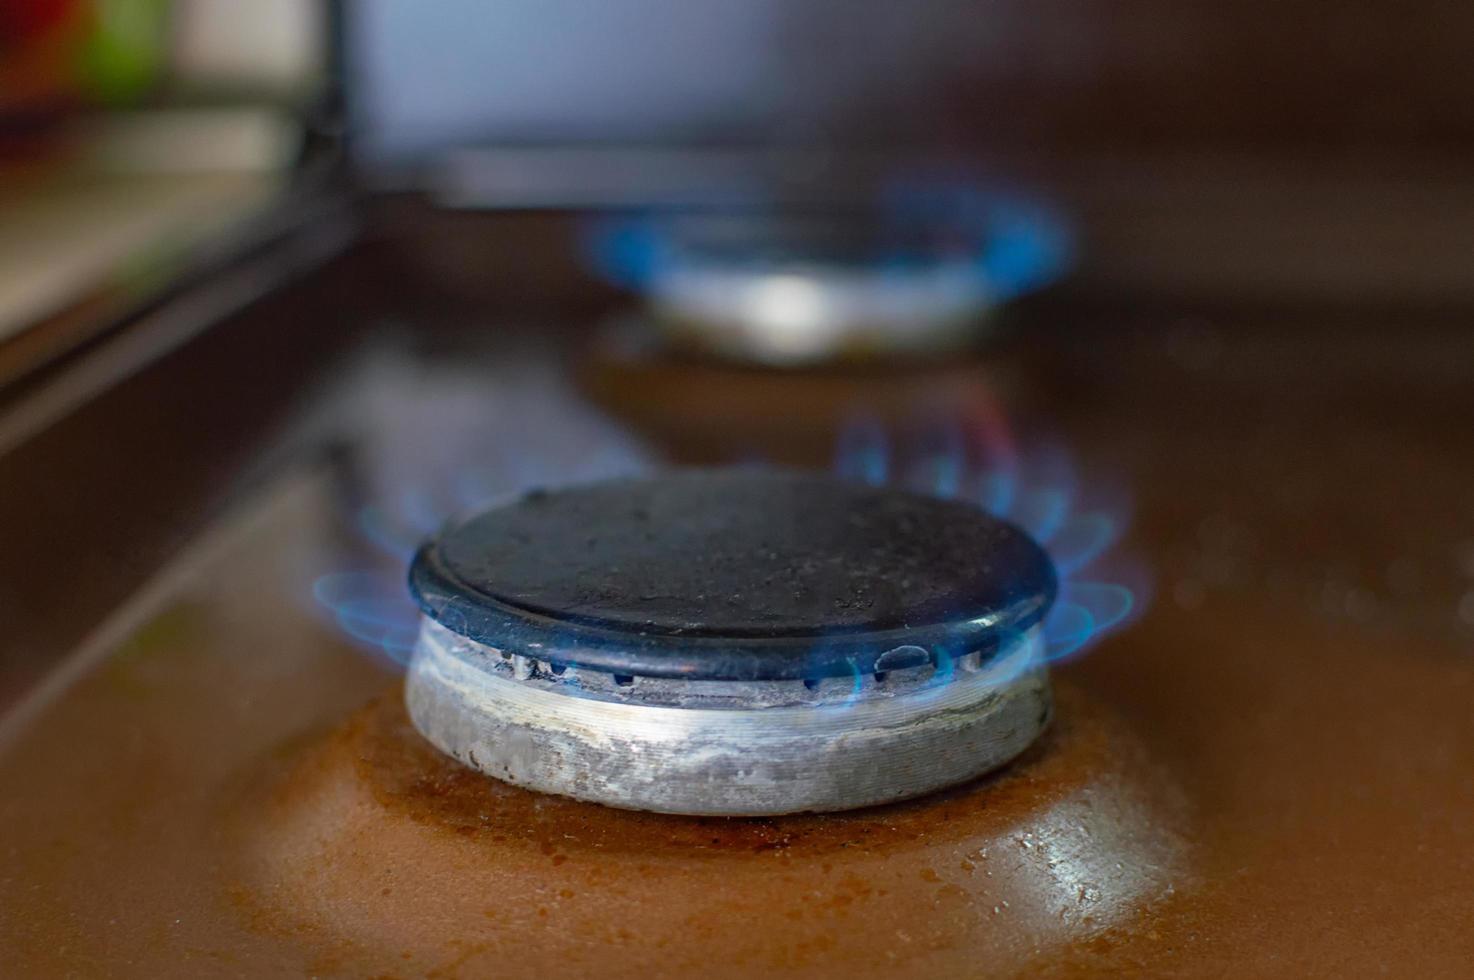 gas burner in the kitchen photo